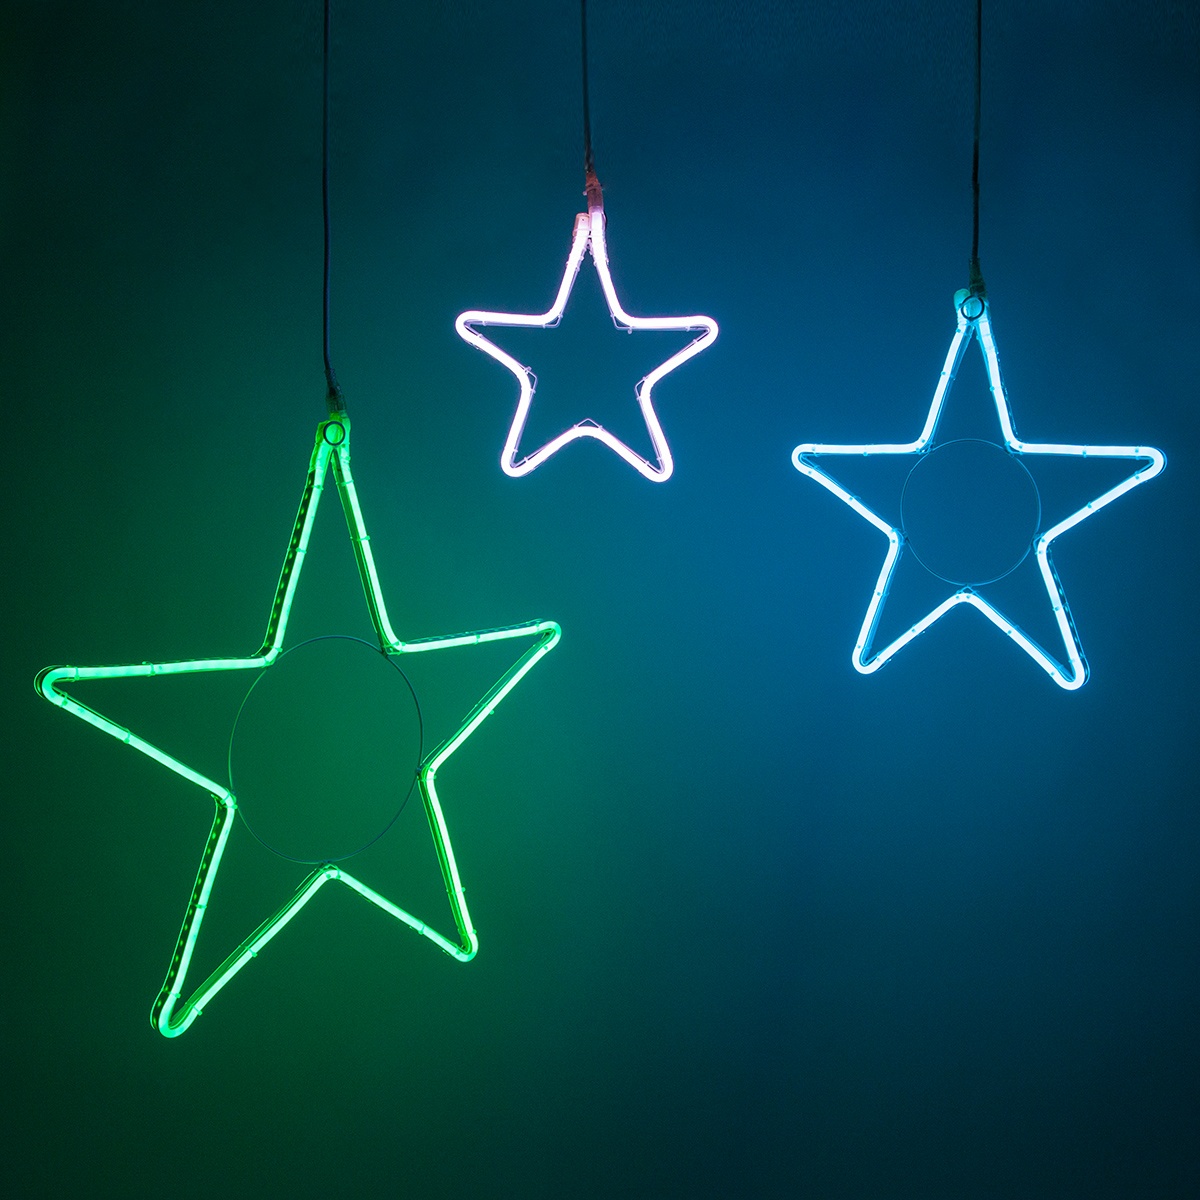 RGB LED Multifunction Flexible Hanging Star Light - Yard Envy